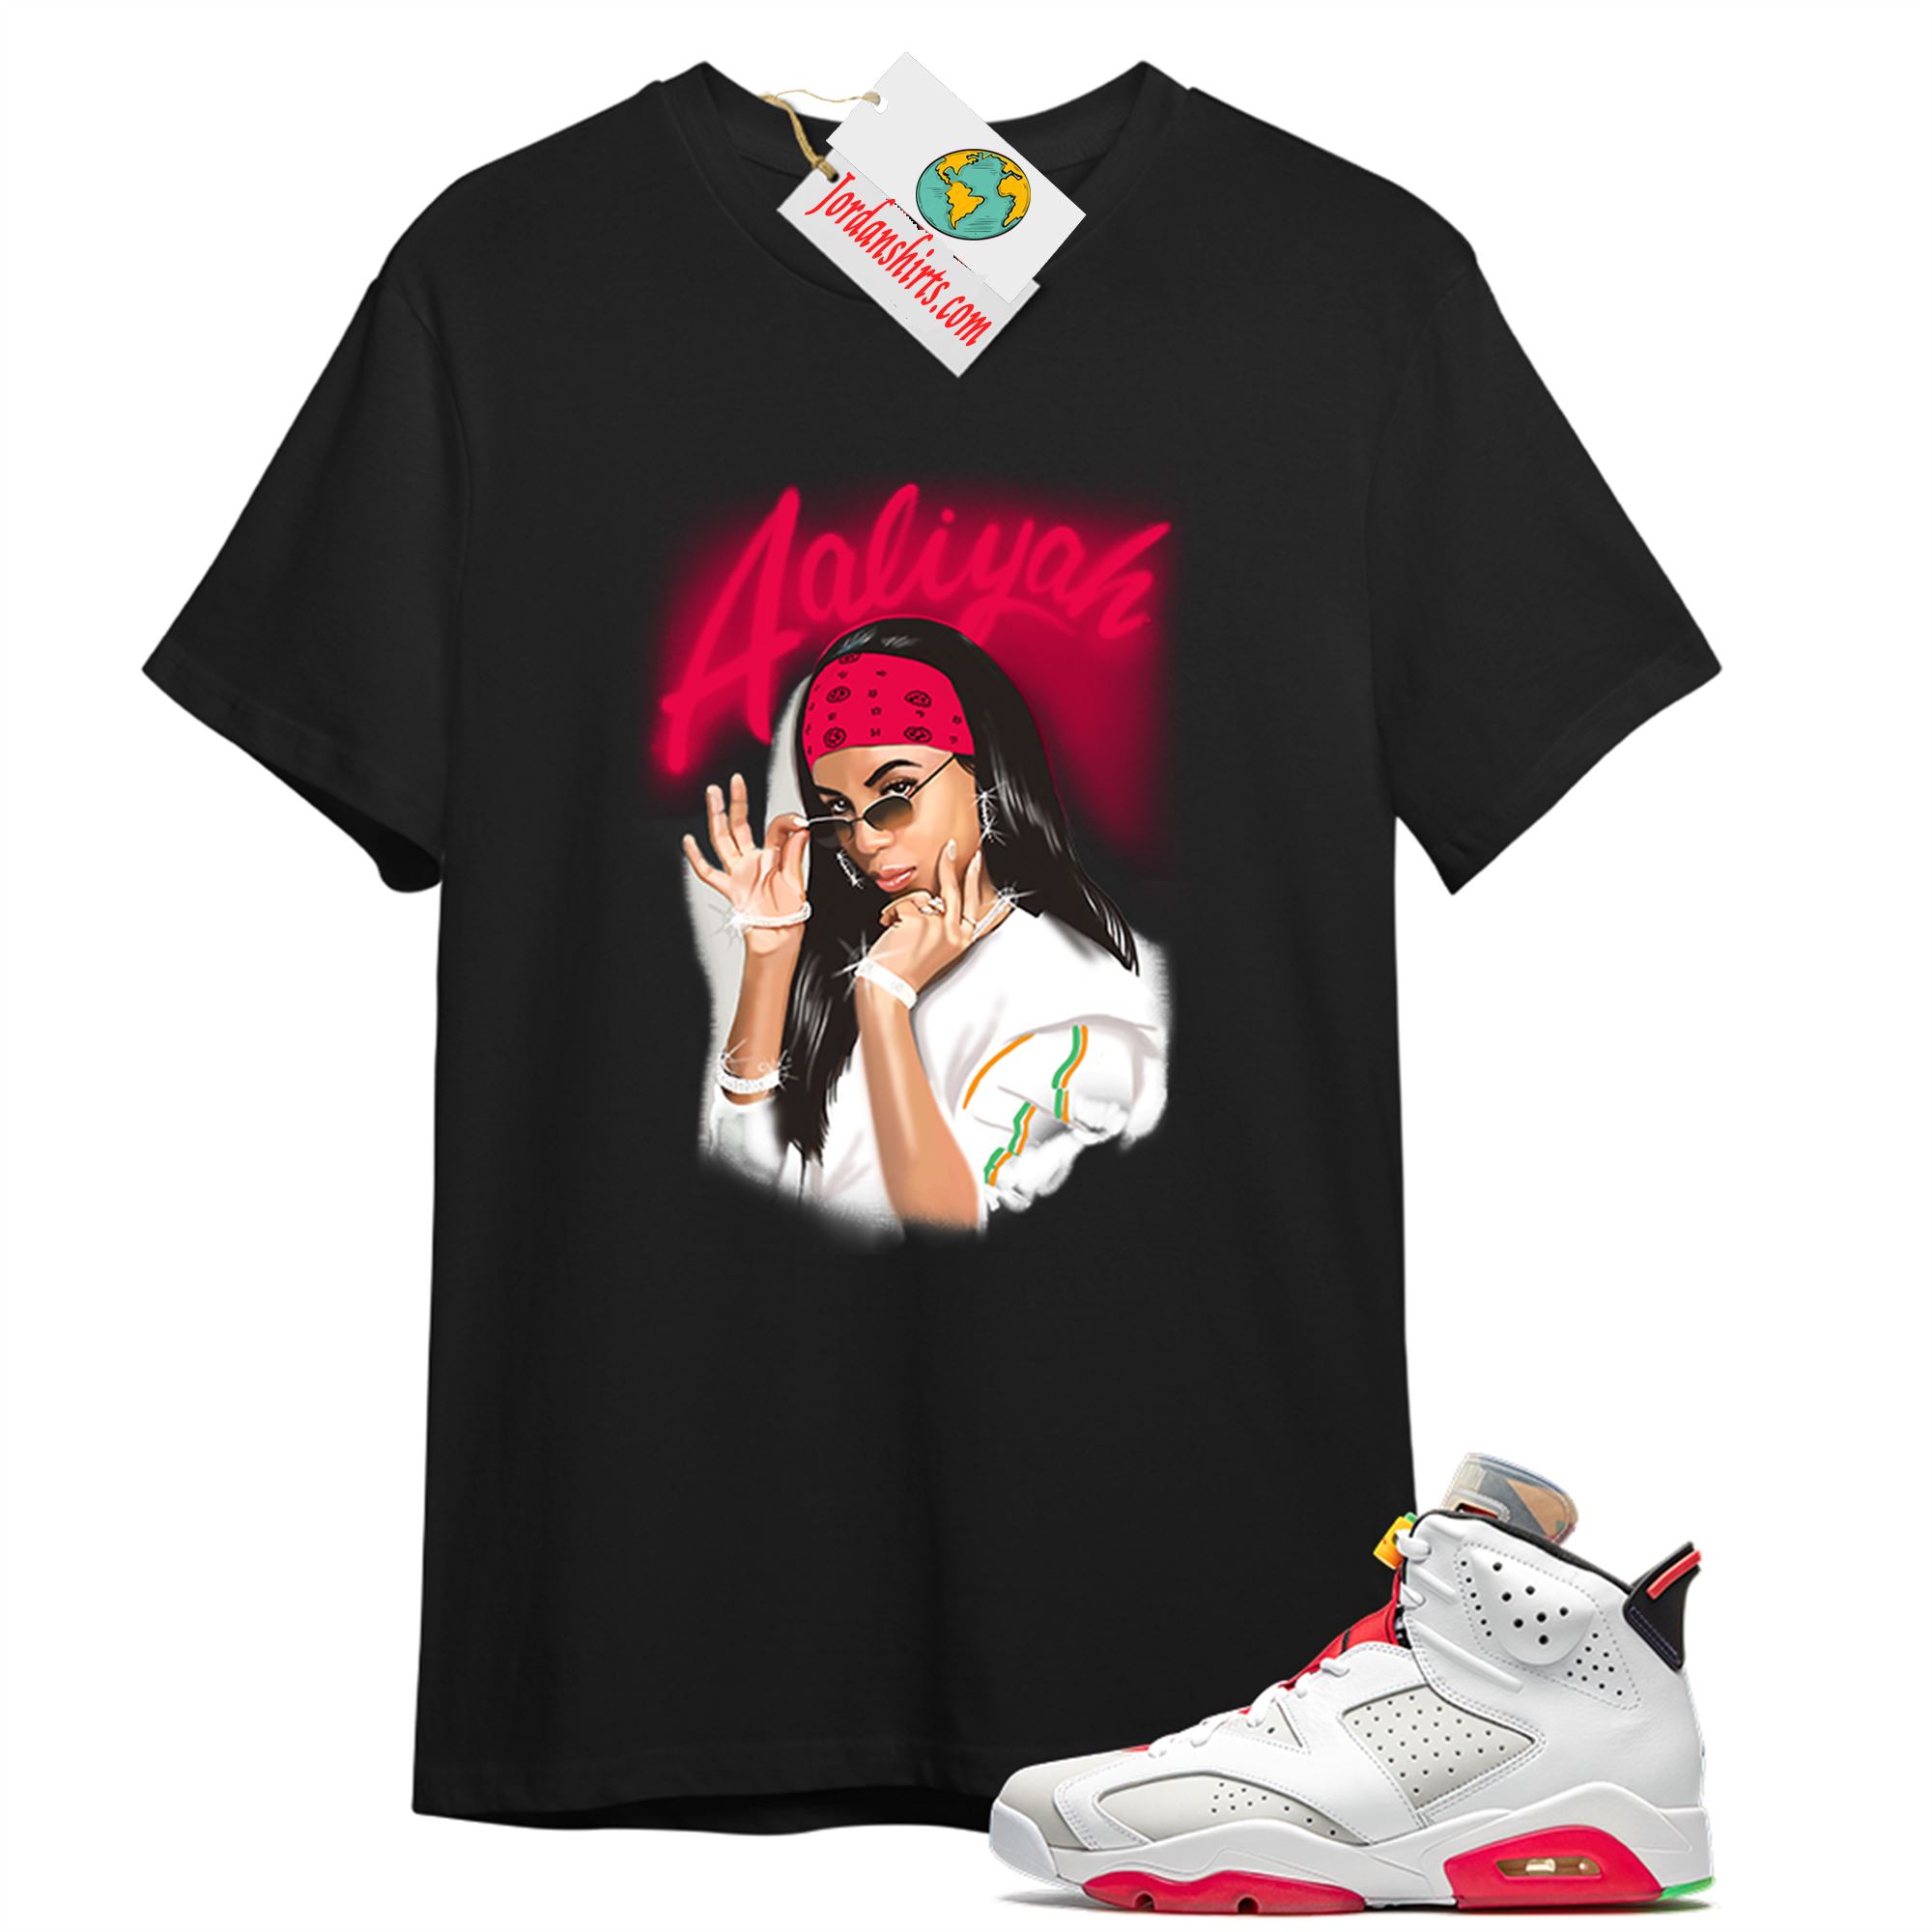 Jordan 6 Shirt, Aaliyah Airbrush Black T-shirt Air Jordan 6 Hare 6s Size Up To 5xl